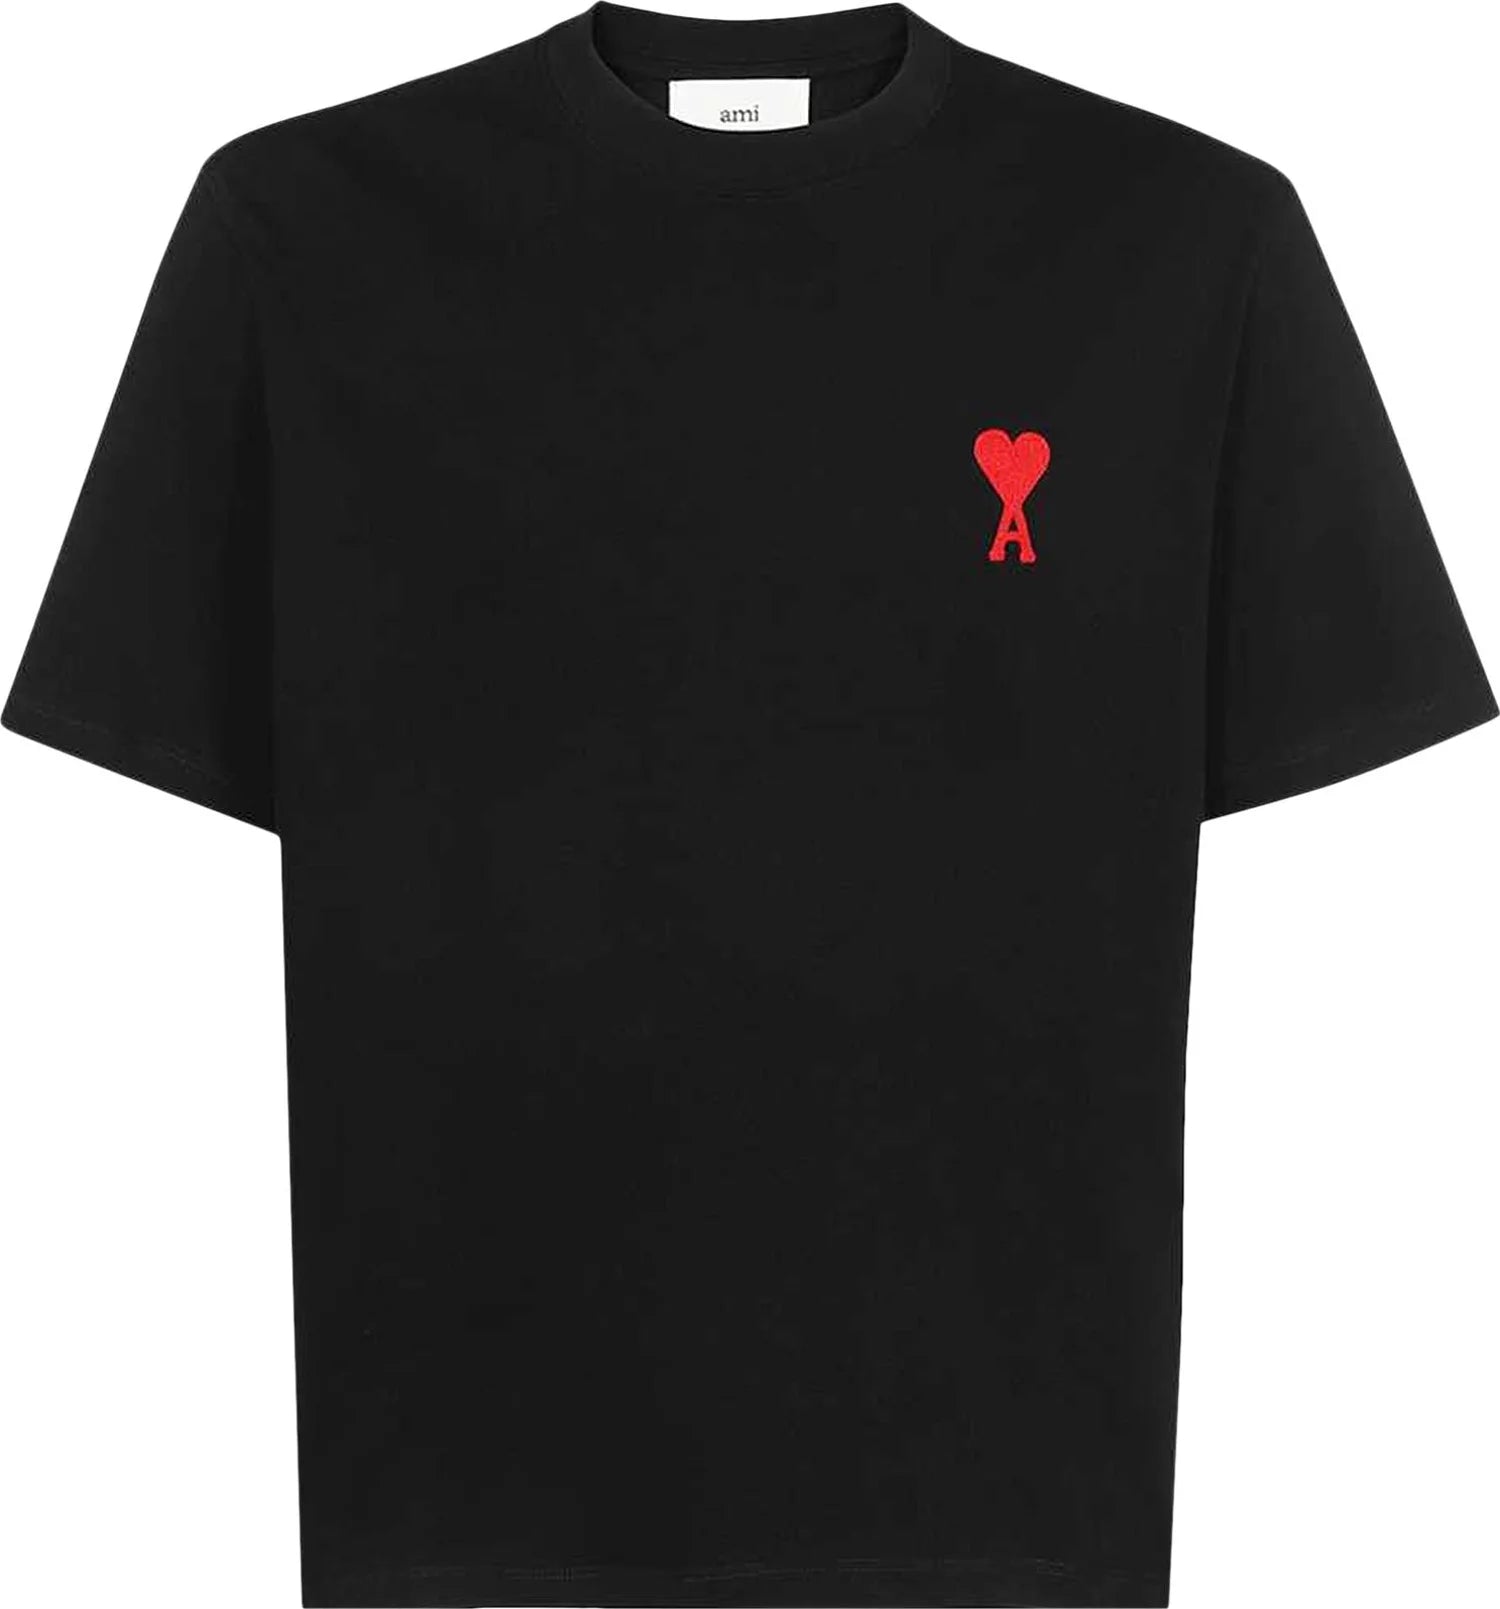 Ami Tonal De Coeur T-Shirt 'Black/Red' Clothing - RepKings